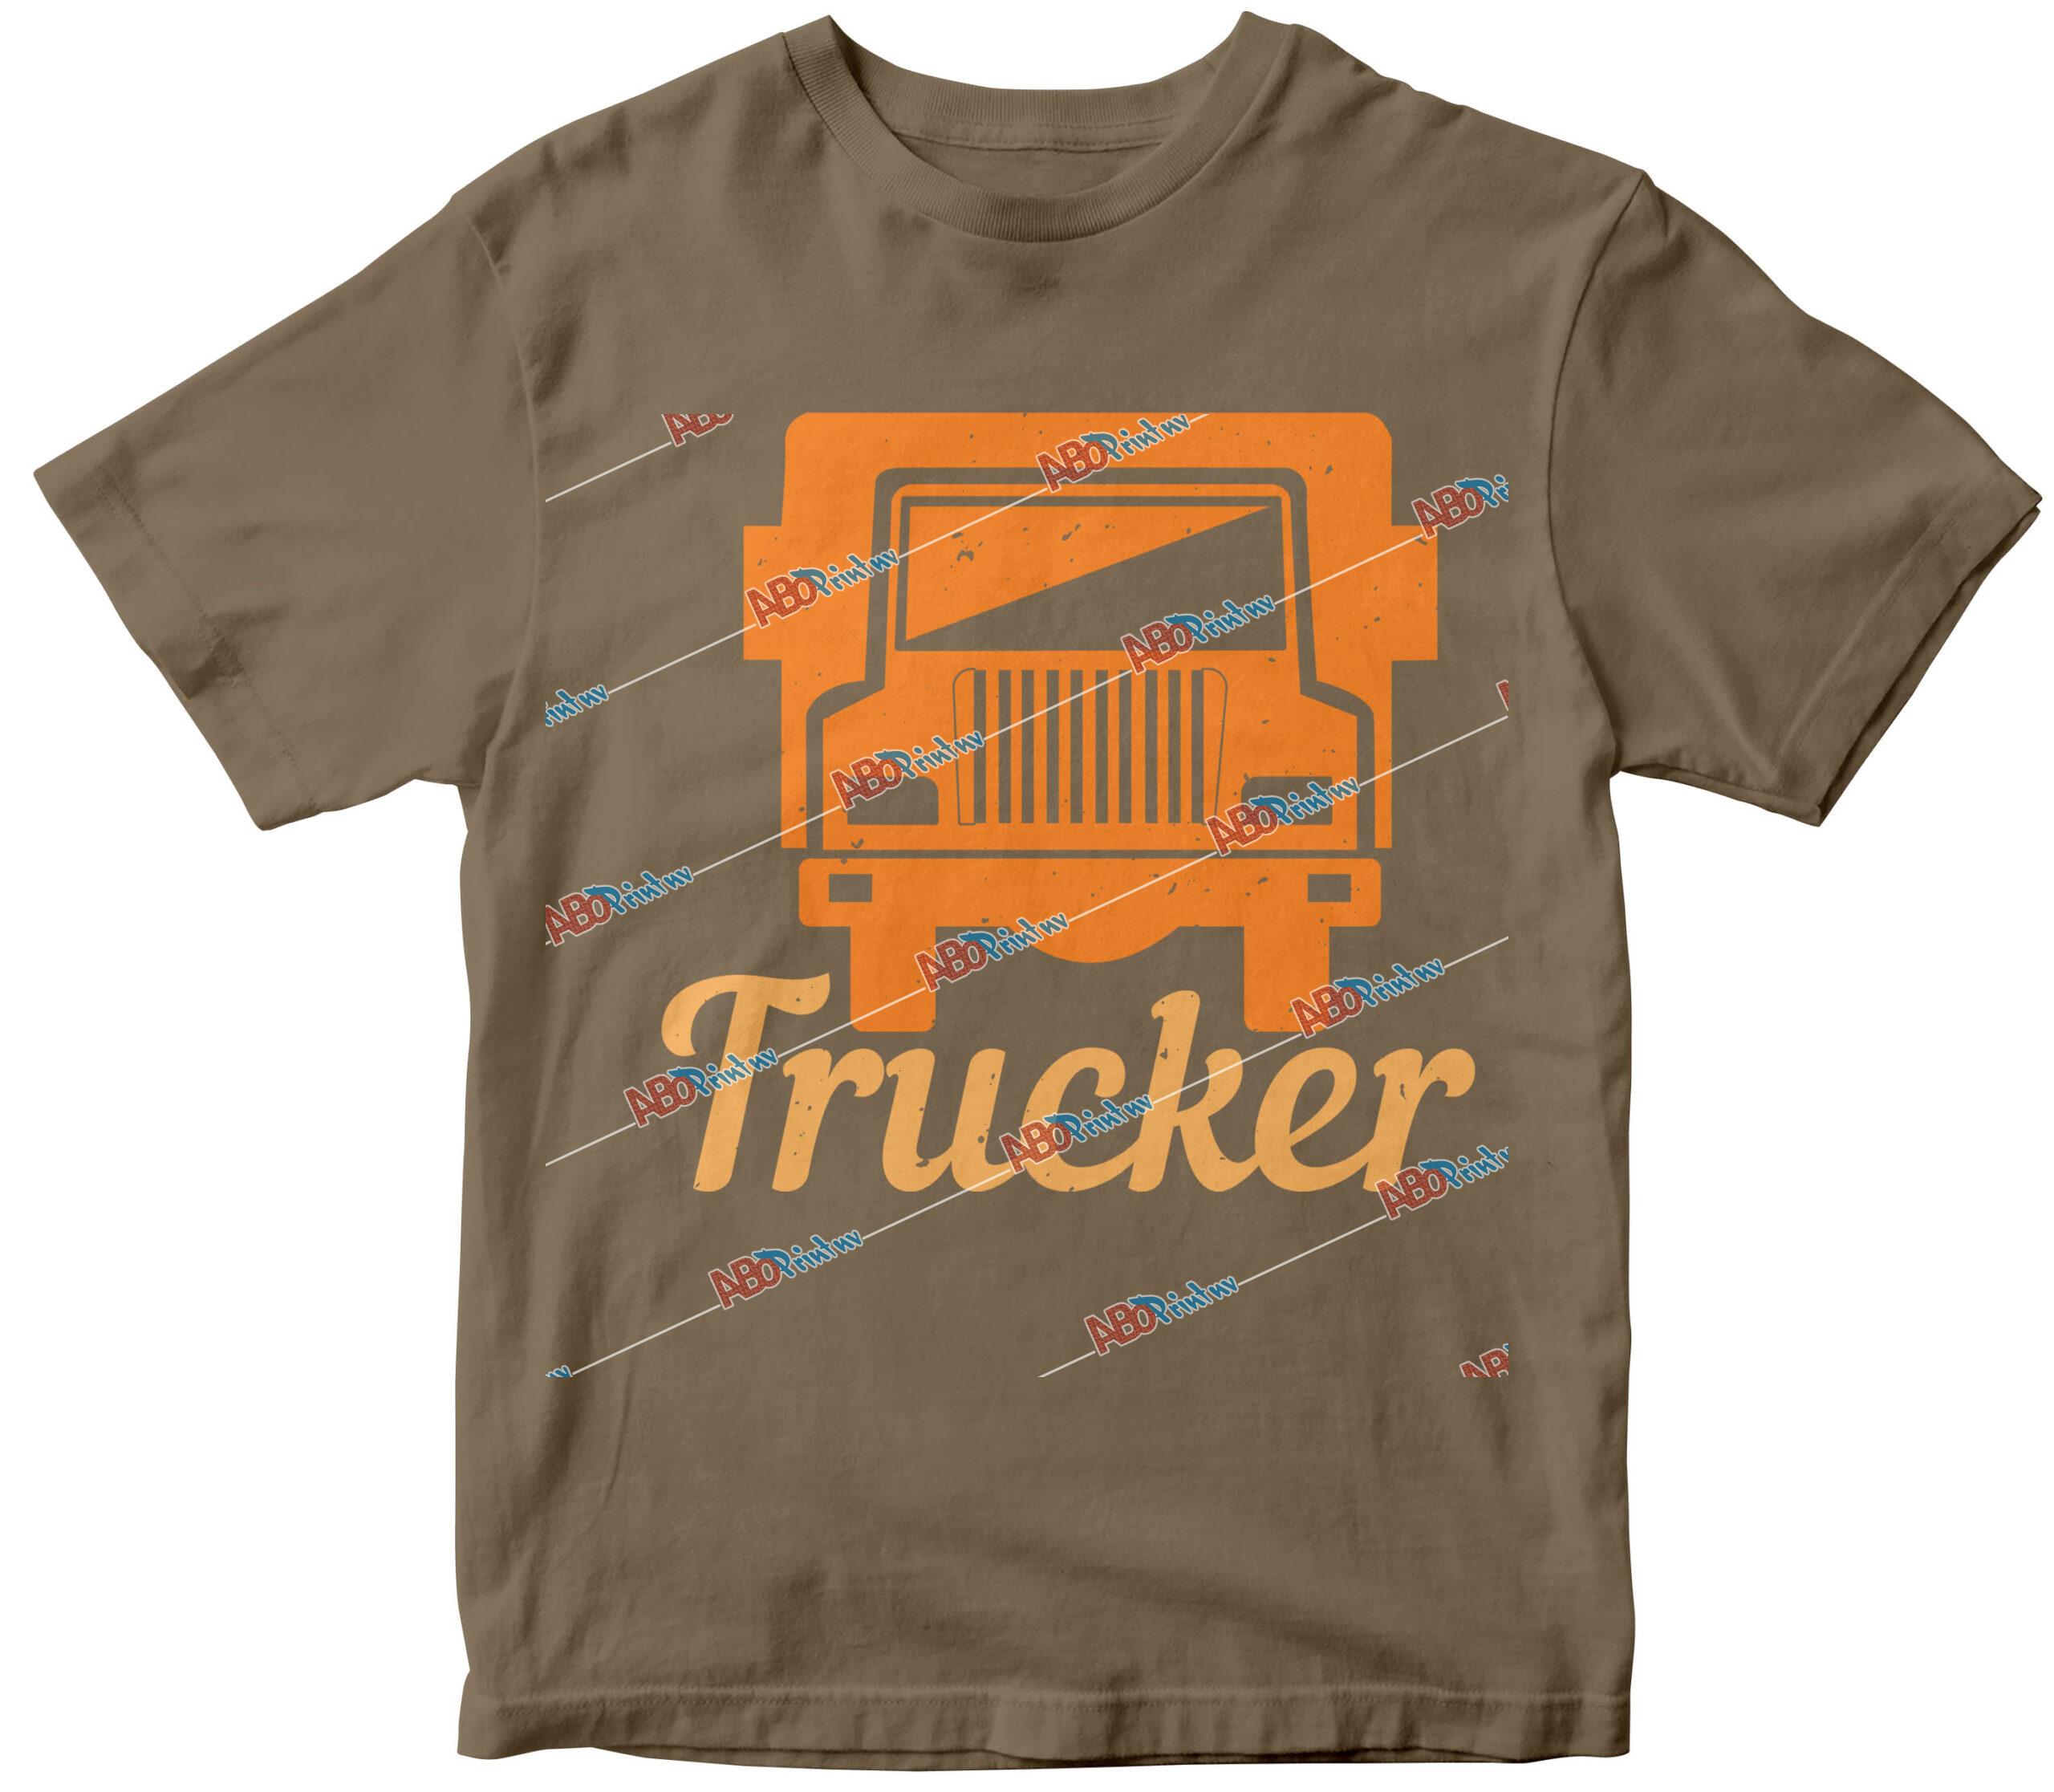 Trucker.jpg